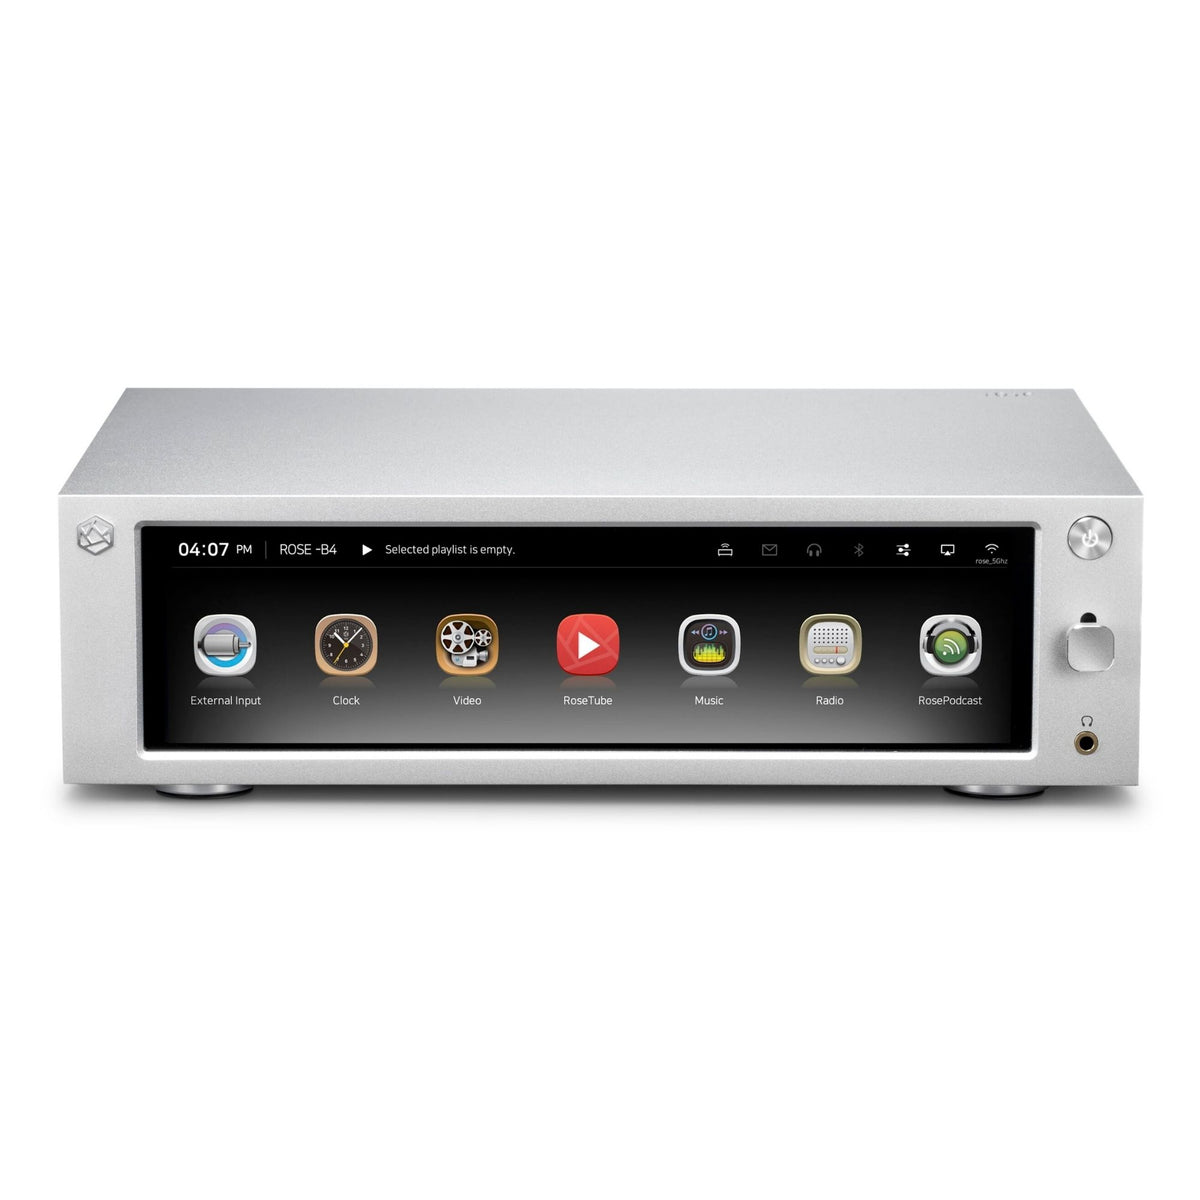 HiFi Rose RS201E - HiFi Media Player - AVStore